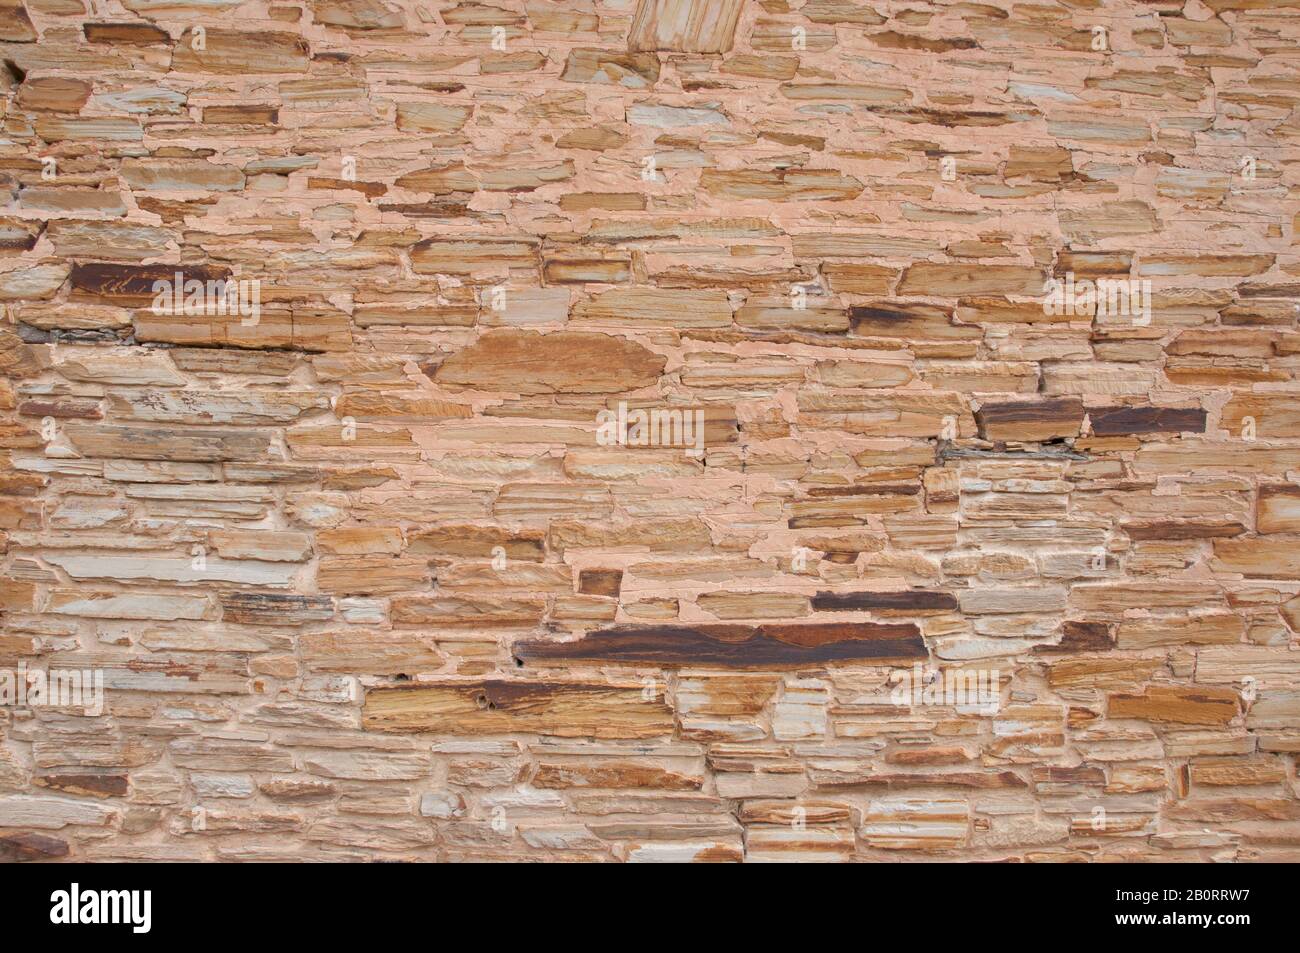 Textures in stone masonry, Willunga, Fleurieu Peninsula, South Australia Stock Photo